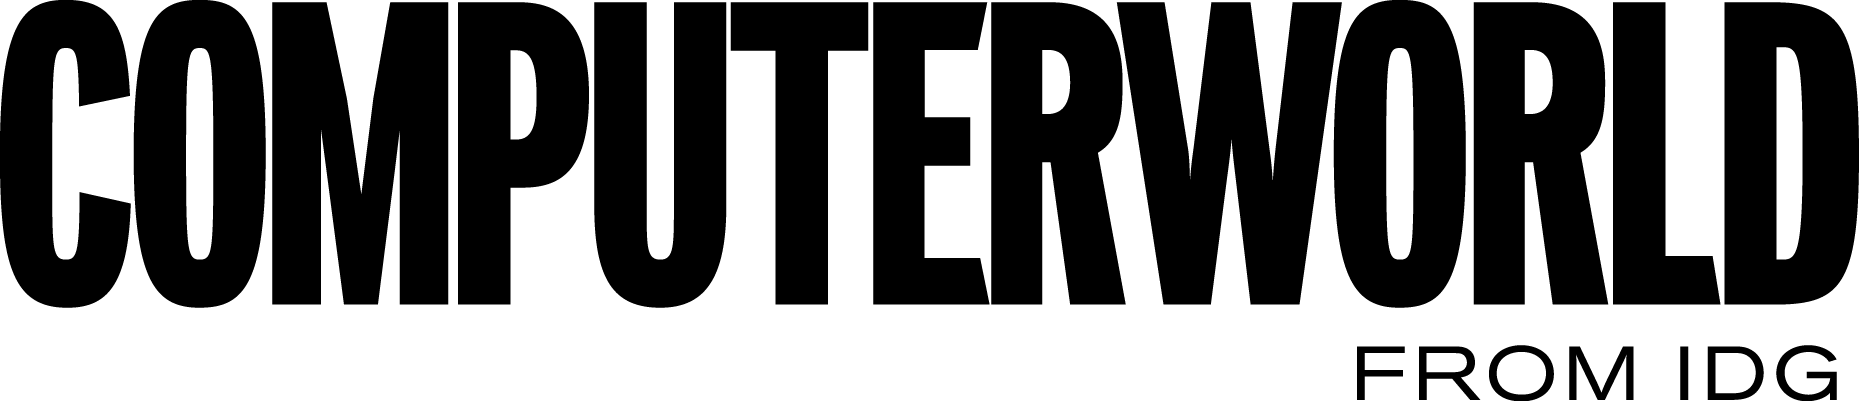 Computerworld_logo.png